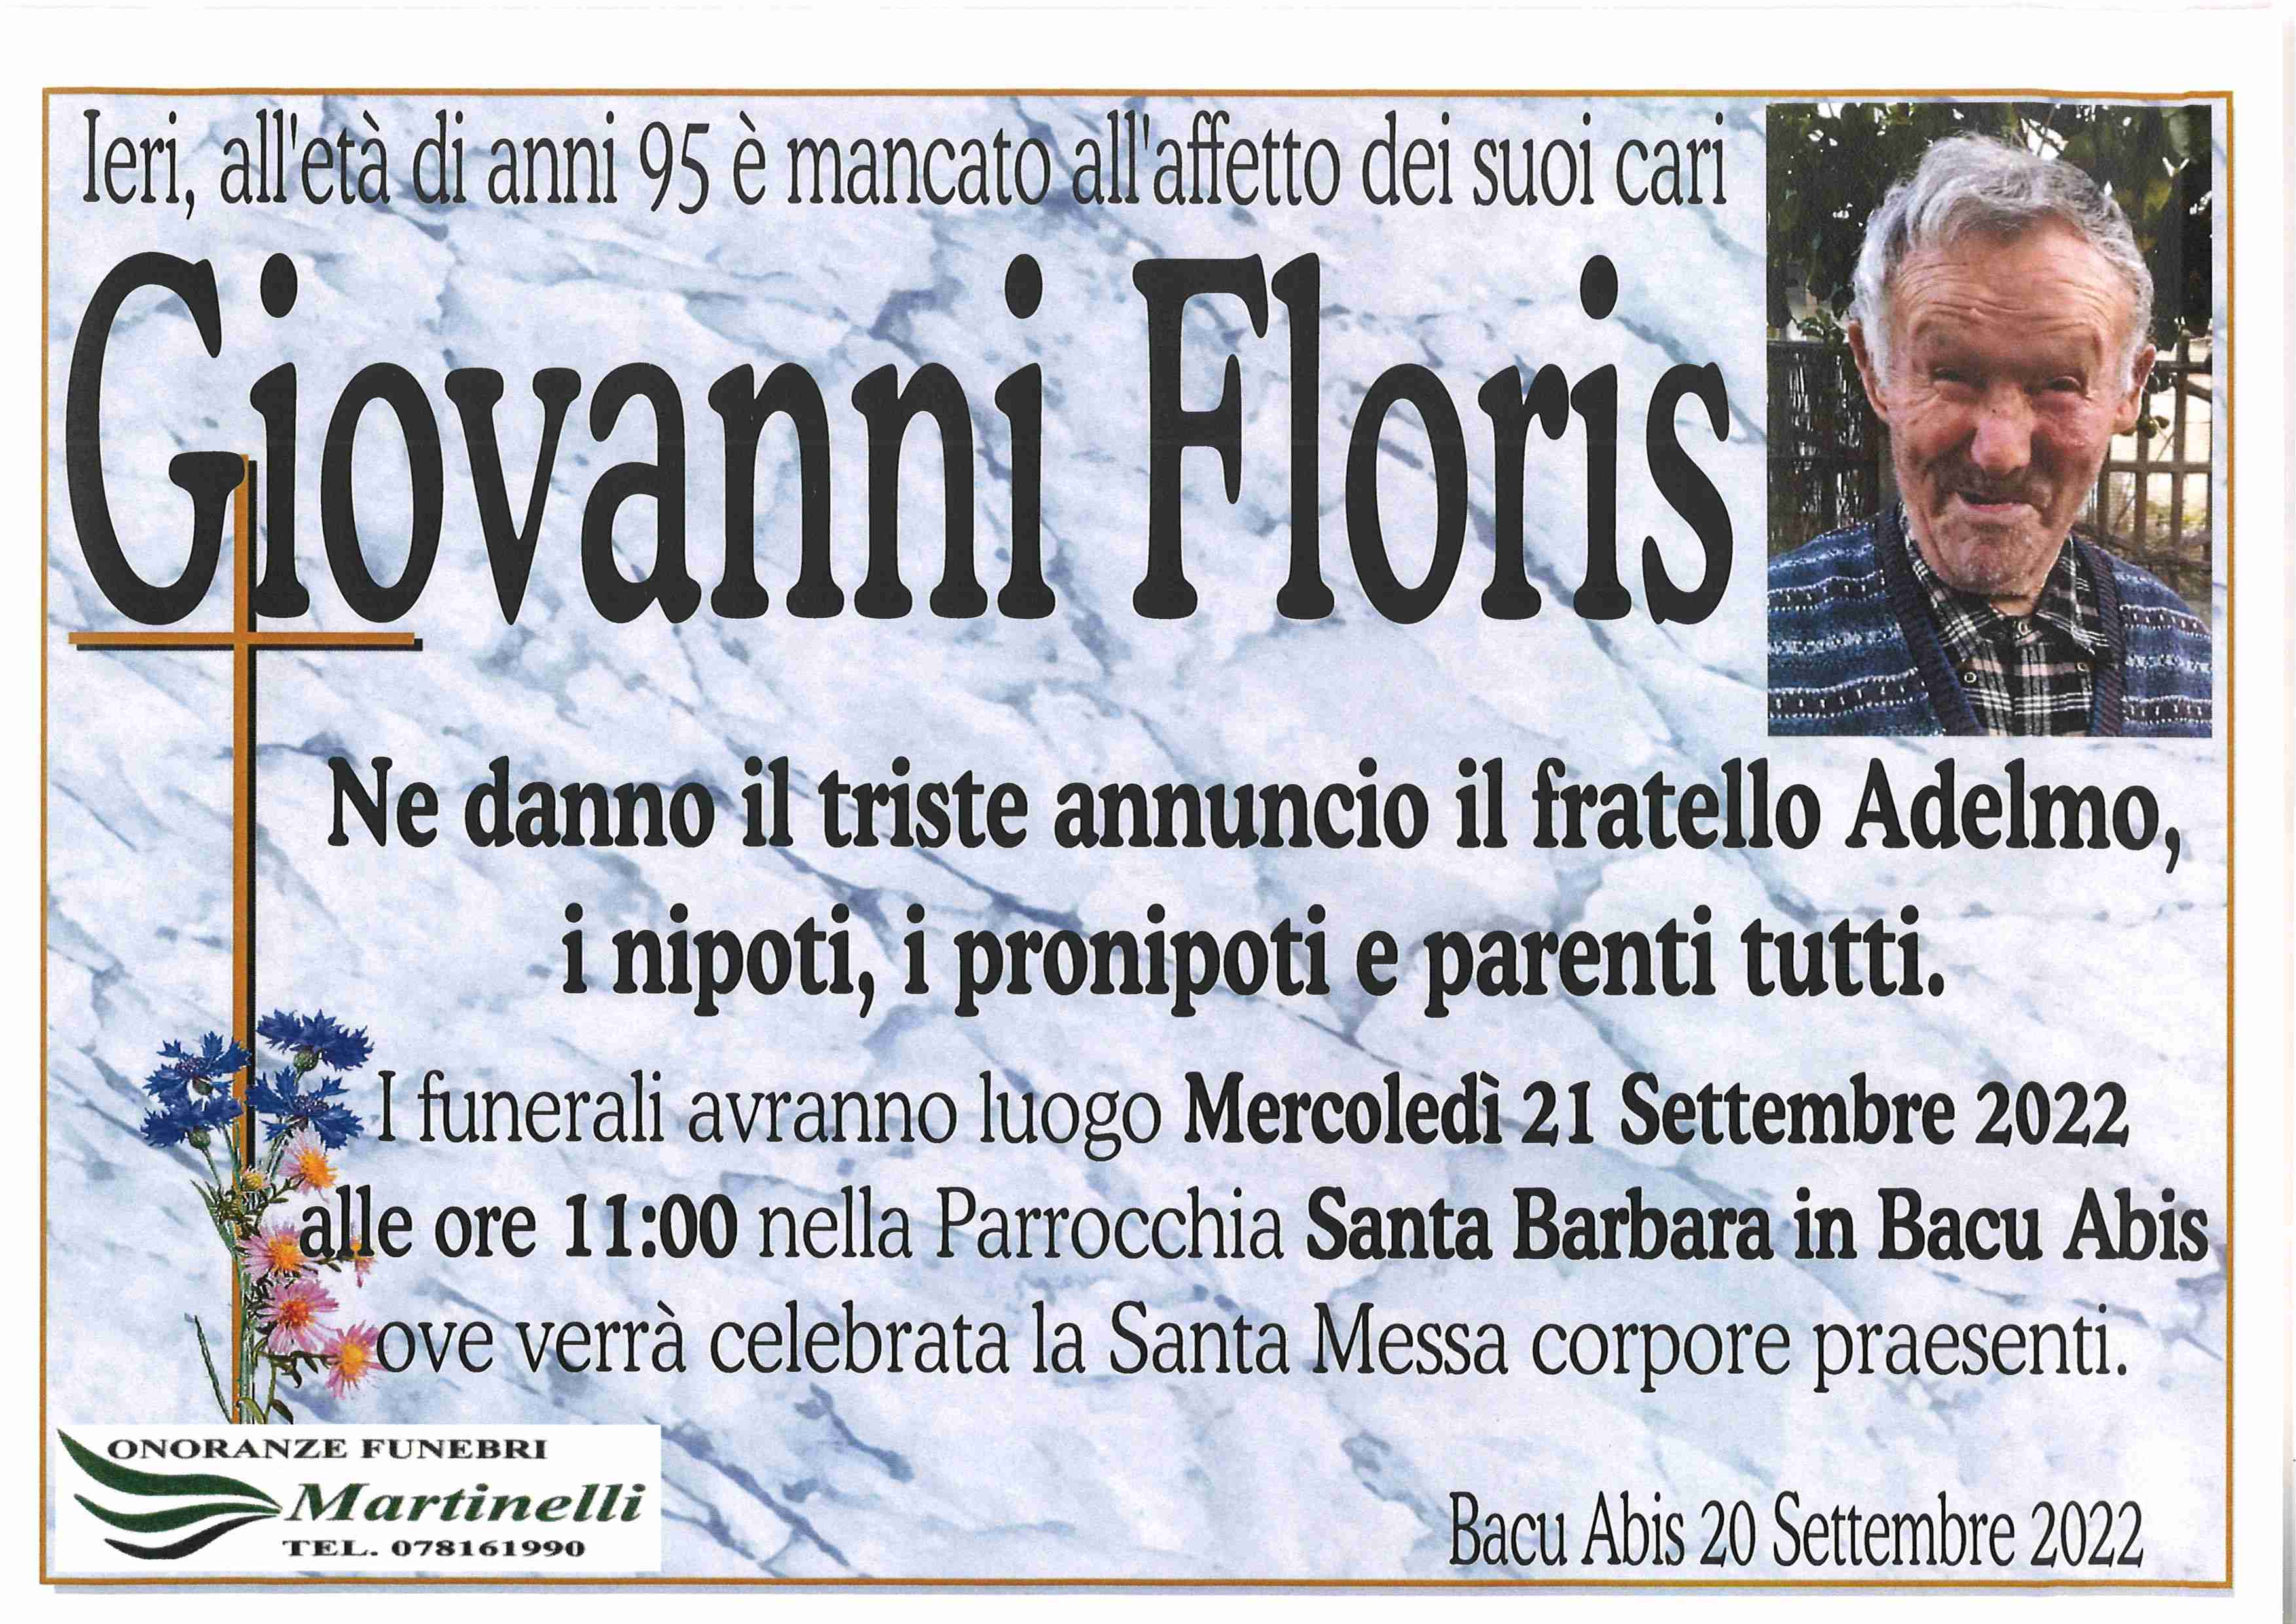 Giovanni Floris